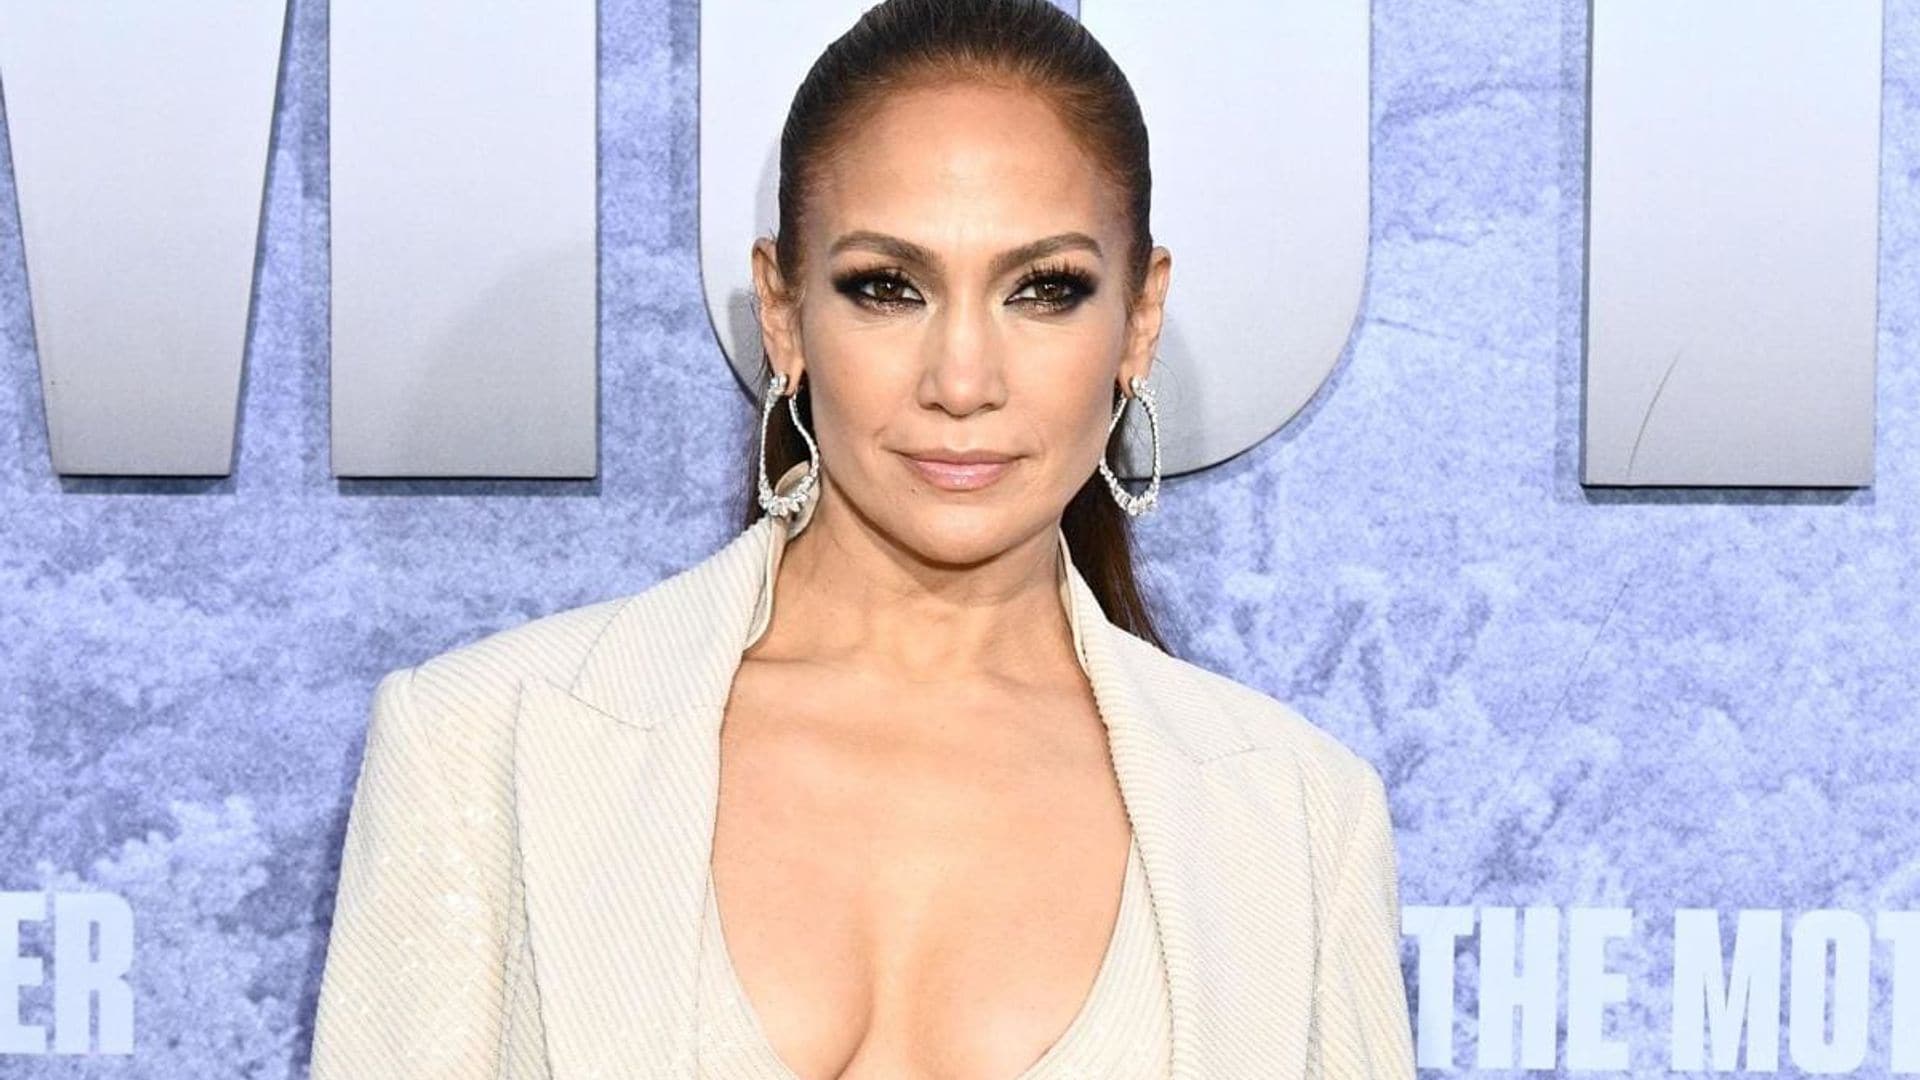 Jennifer Lopez joins the 90s supermodel manicure trend: See pics